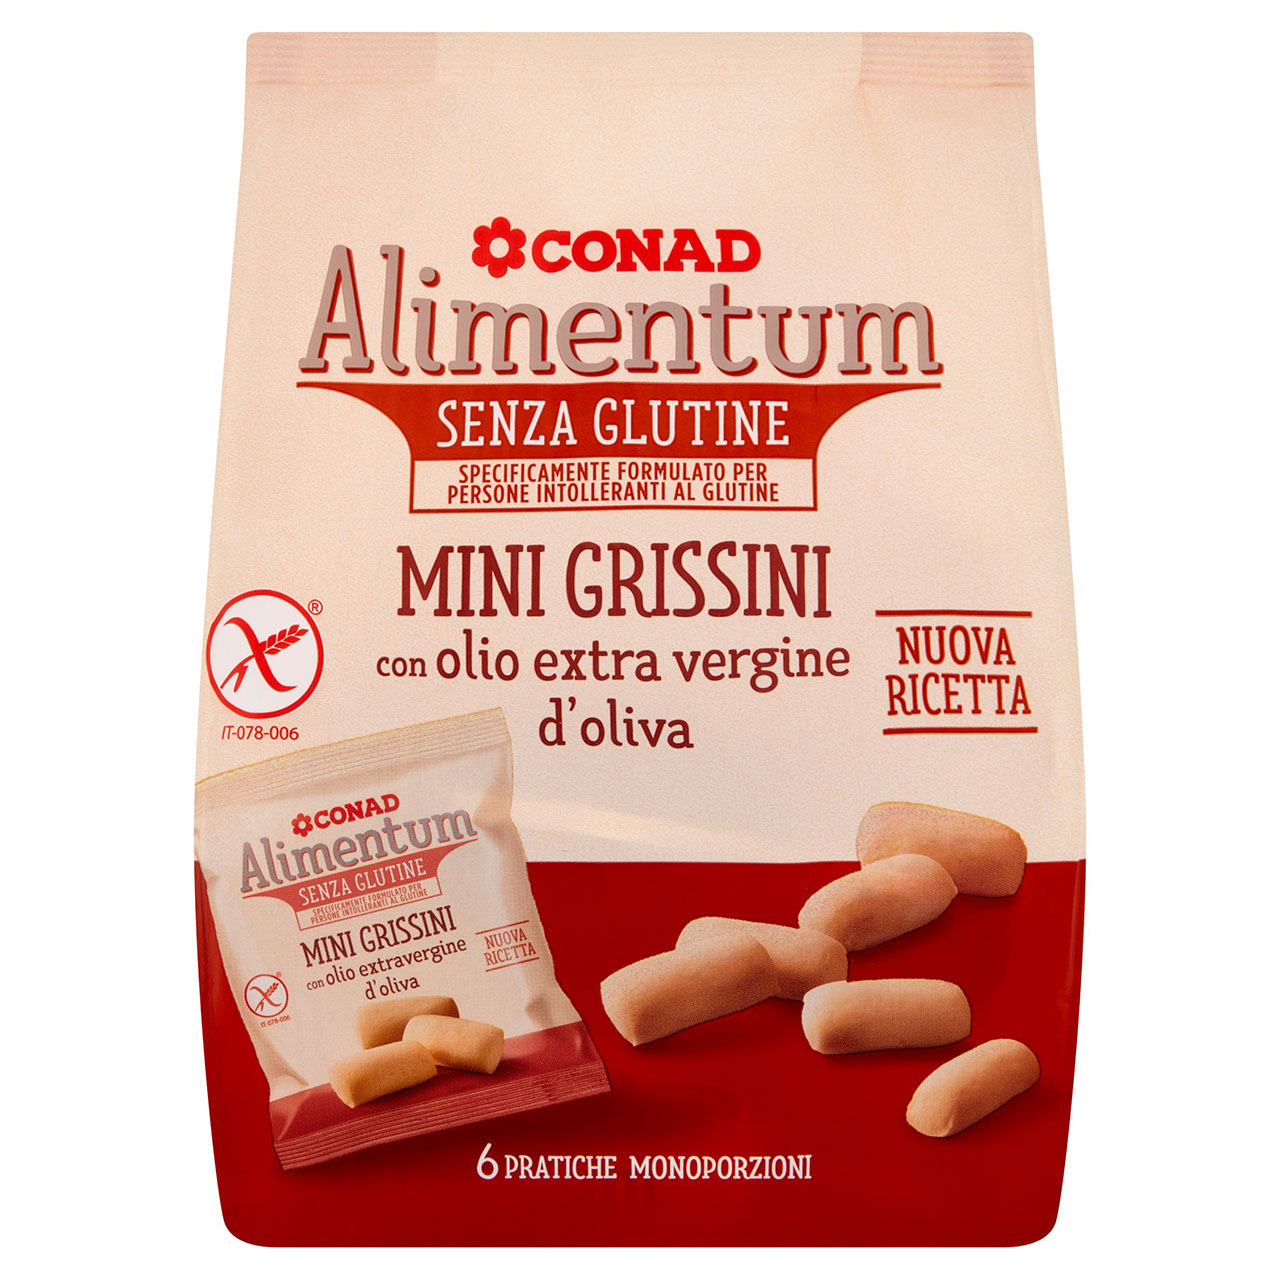 Alimentum Frollini Senza Glutine in vendita online